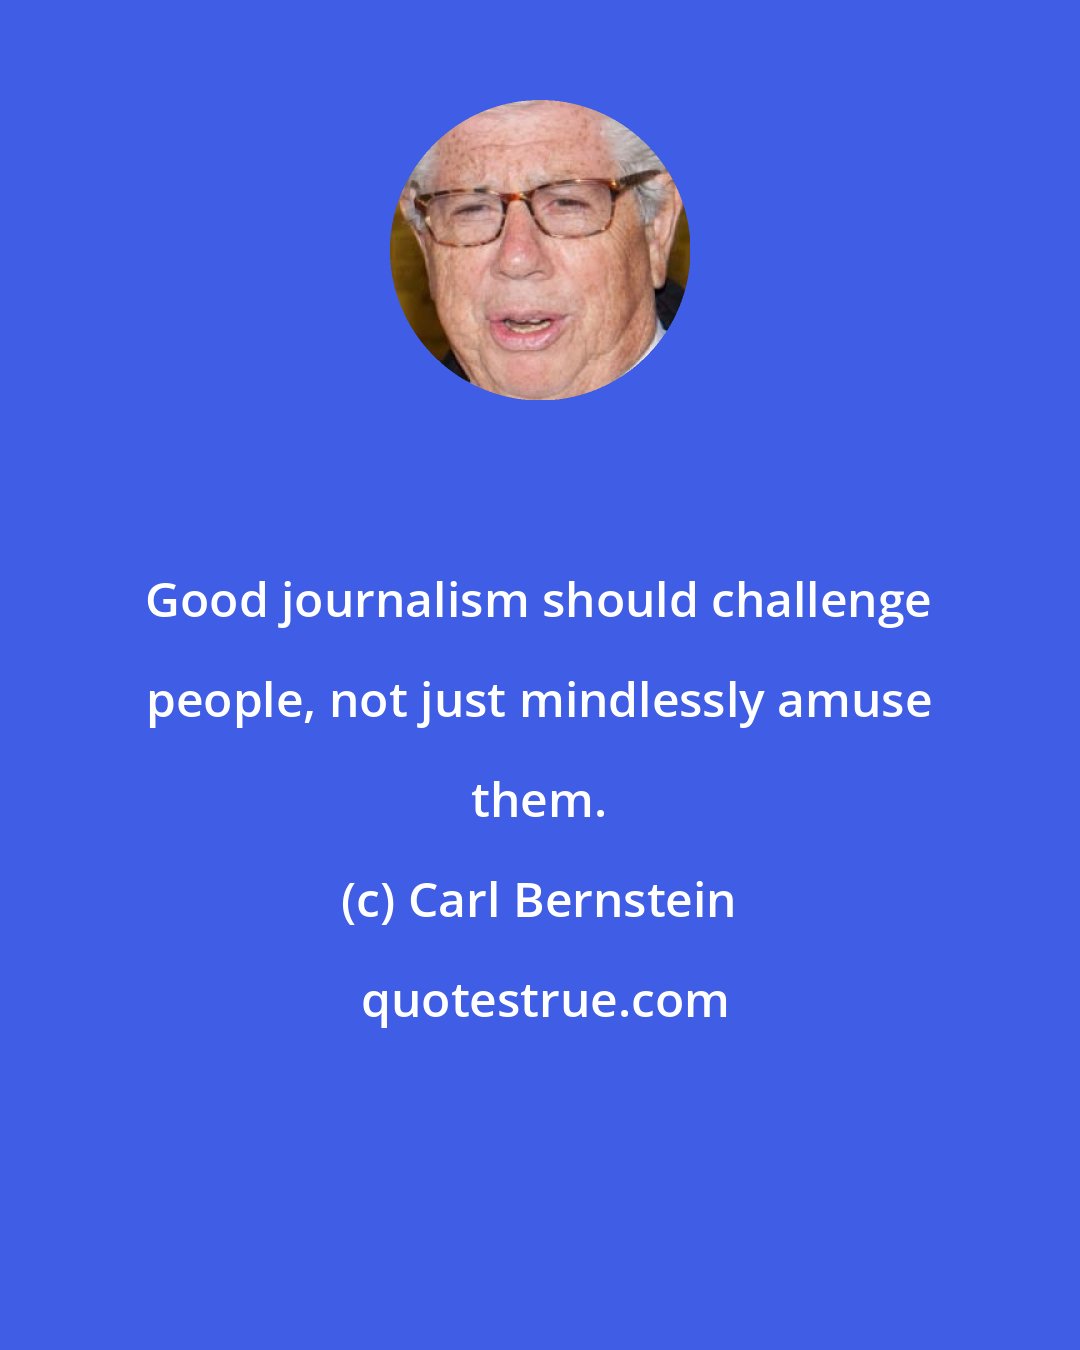 Carl Bernstein: Good journalism should challenge people, not just mindlessly amuse them.